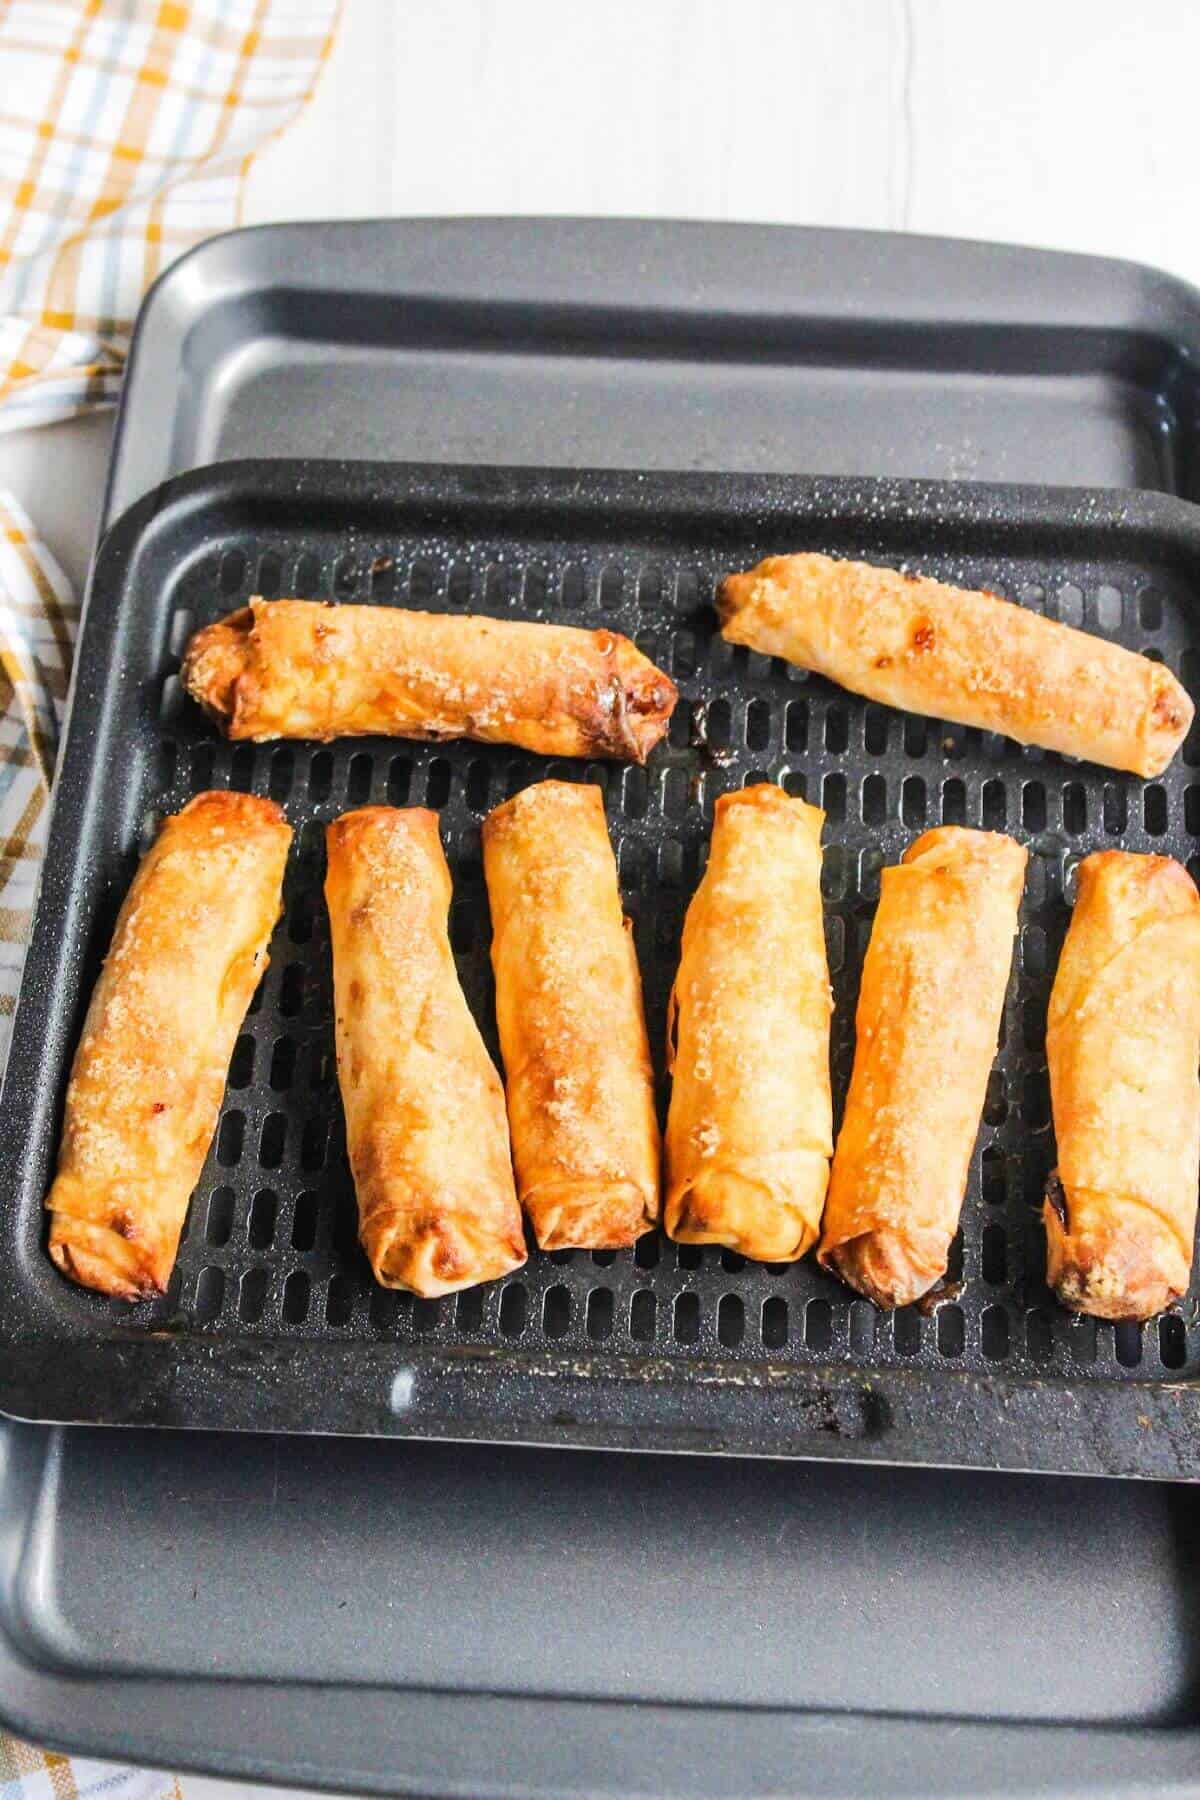 Fried banana turon lumpia rolls on a baking sheet.